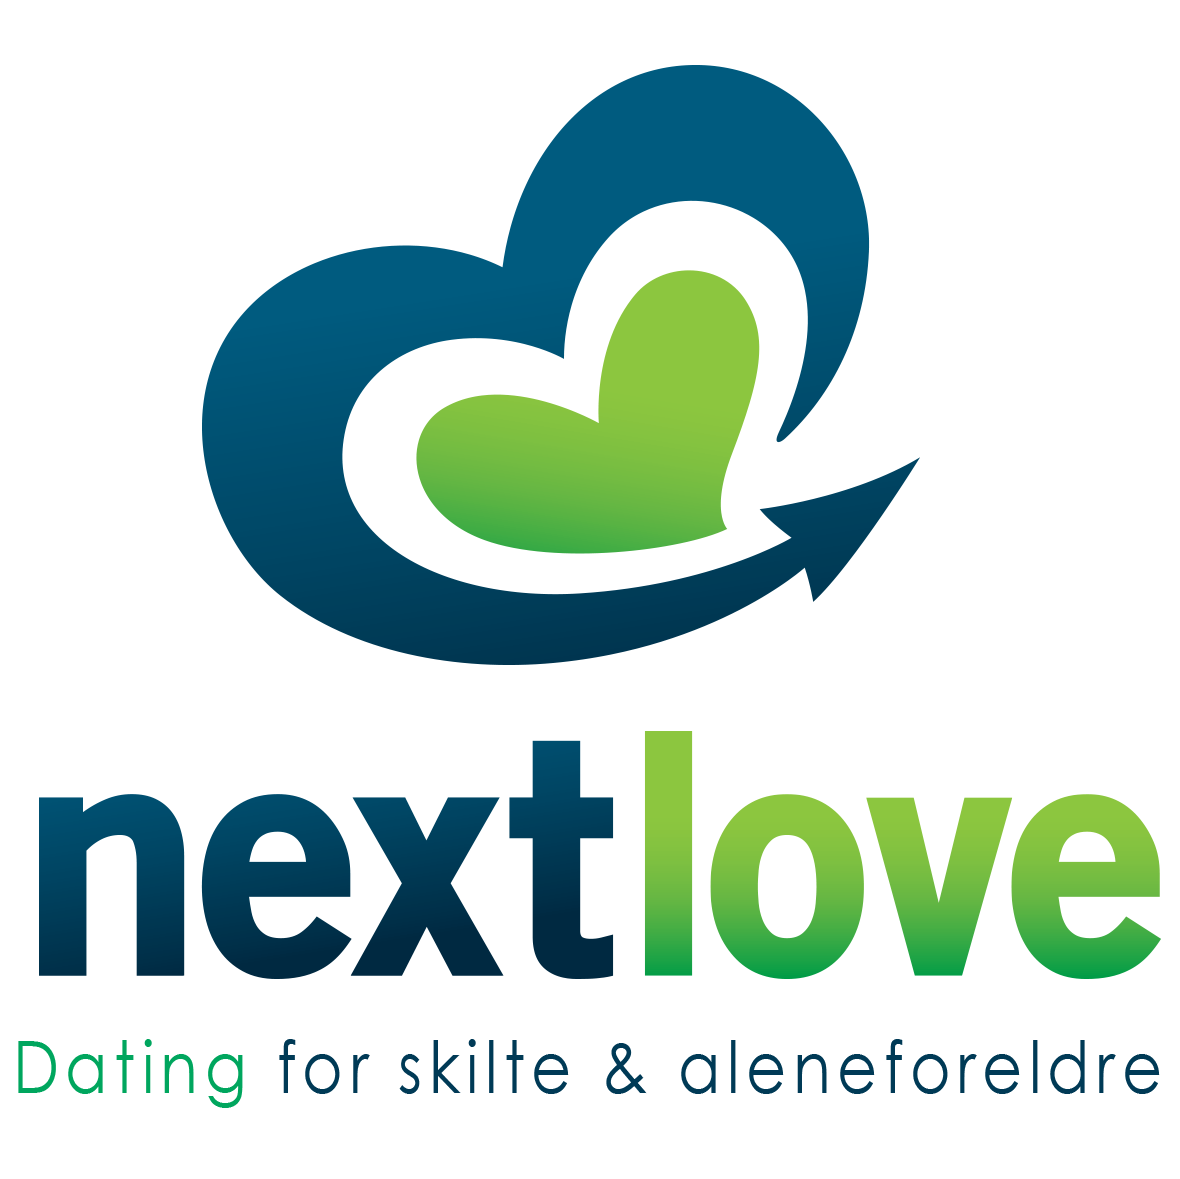 Next Love Logo